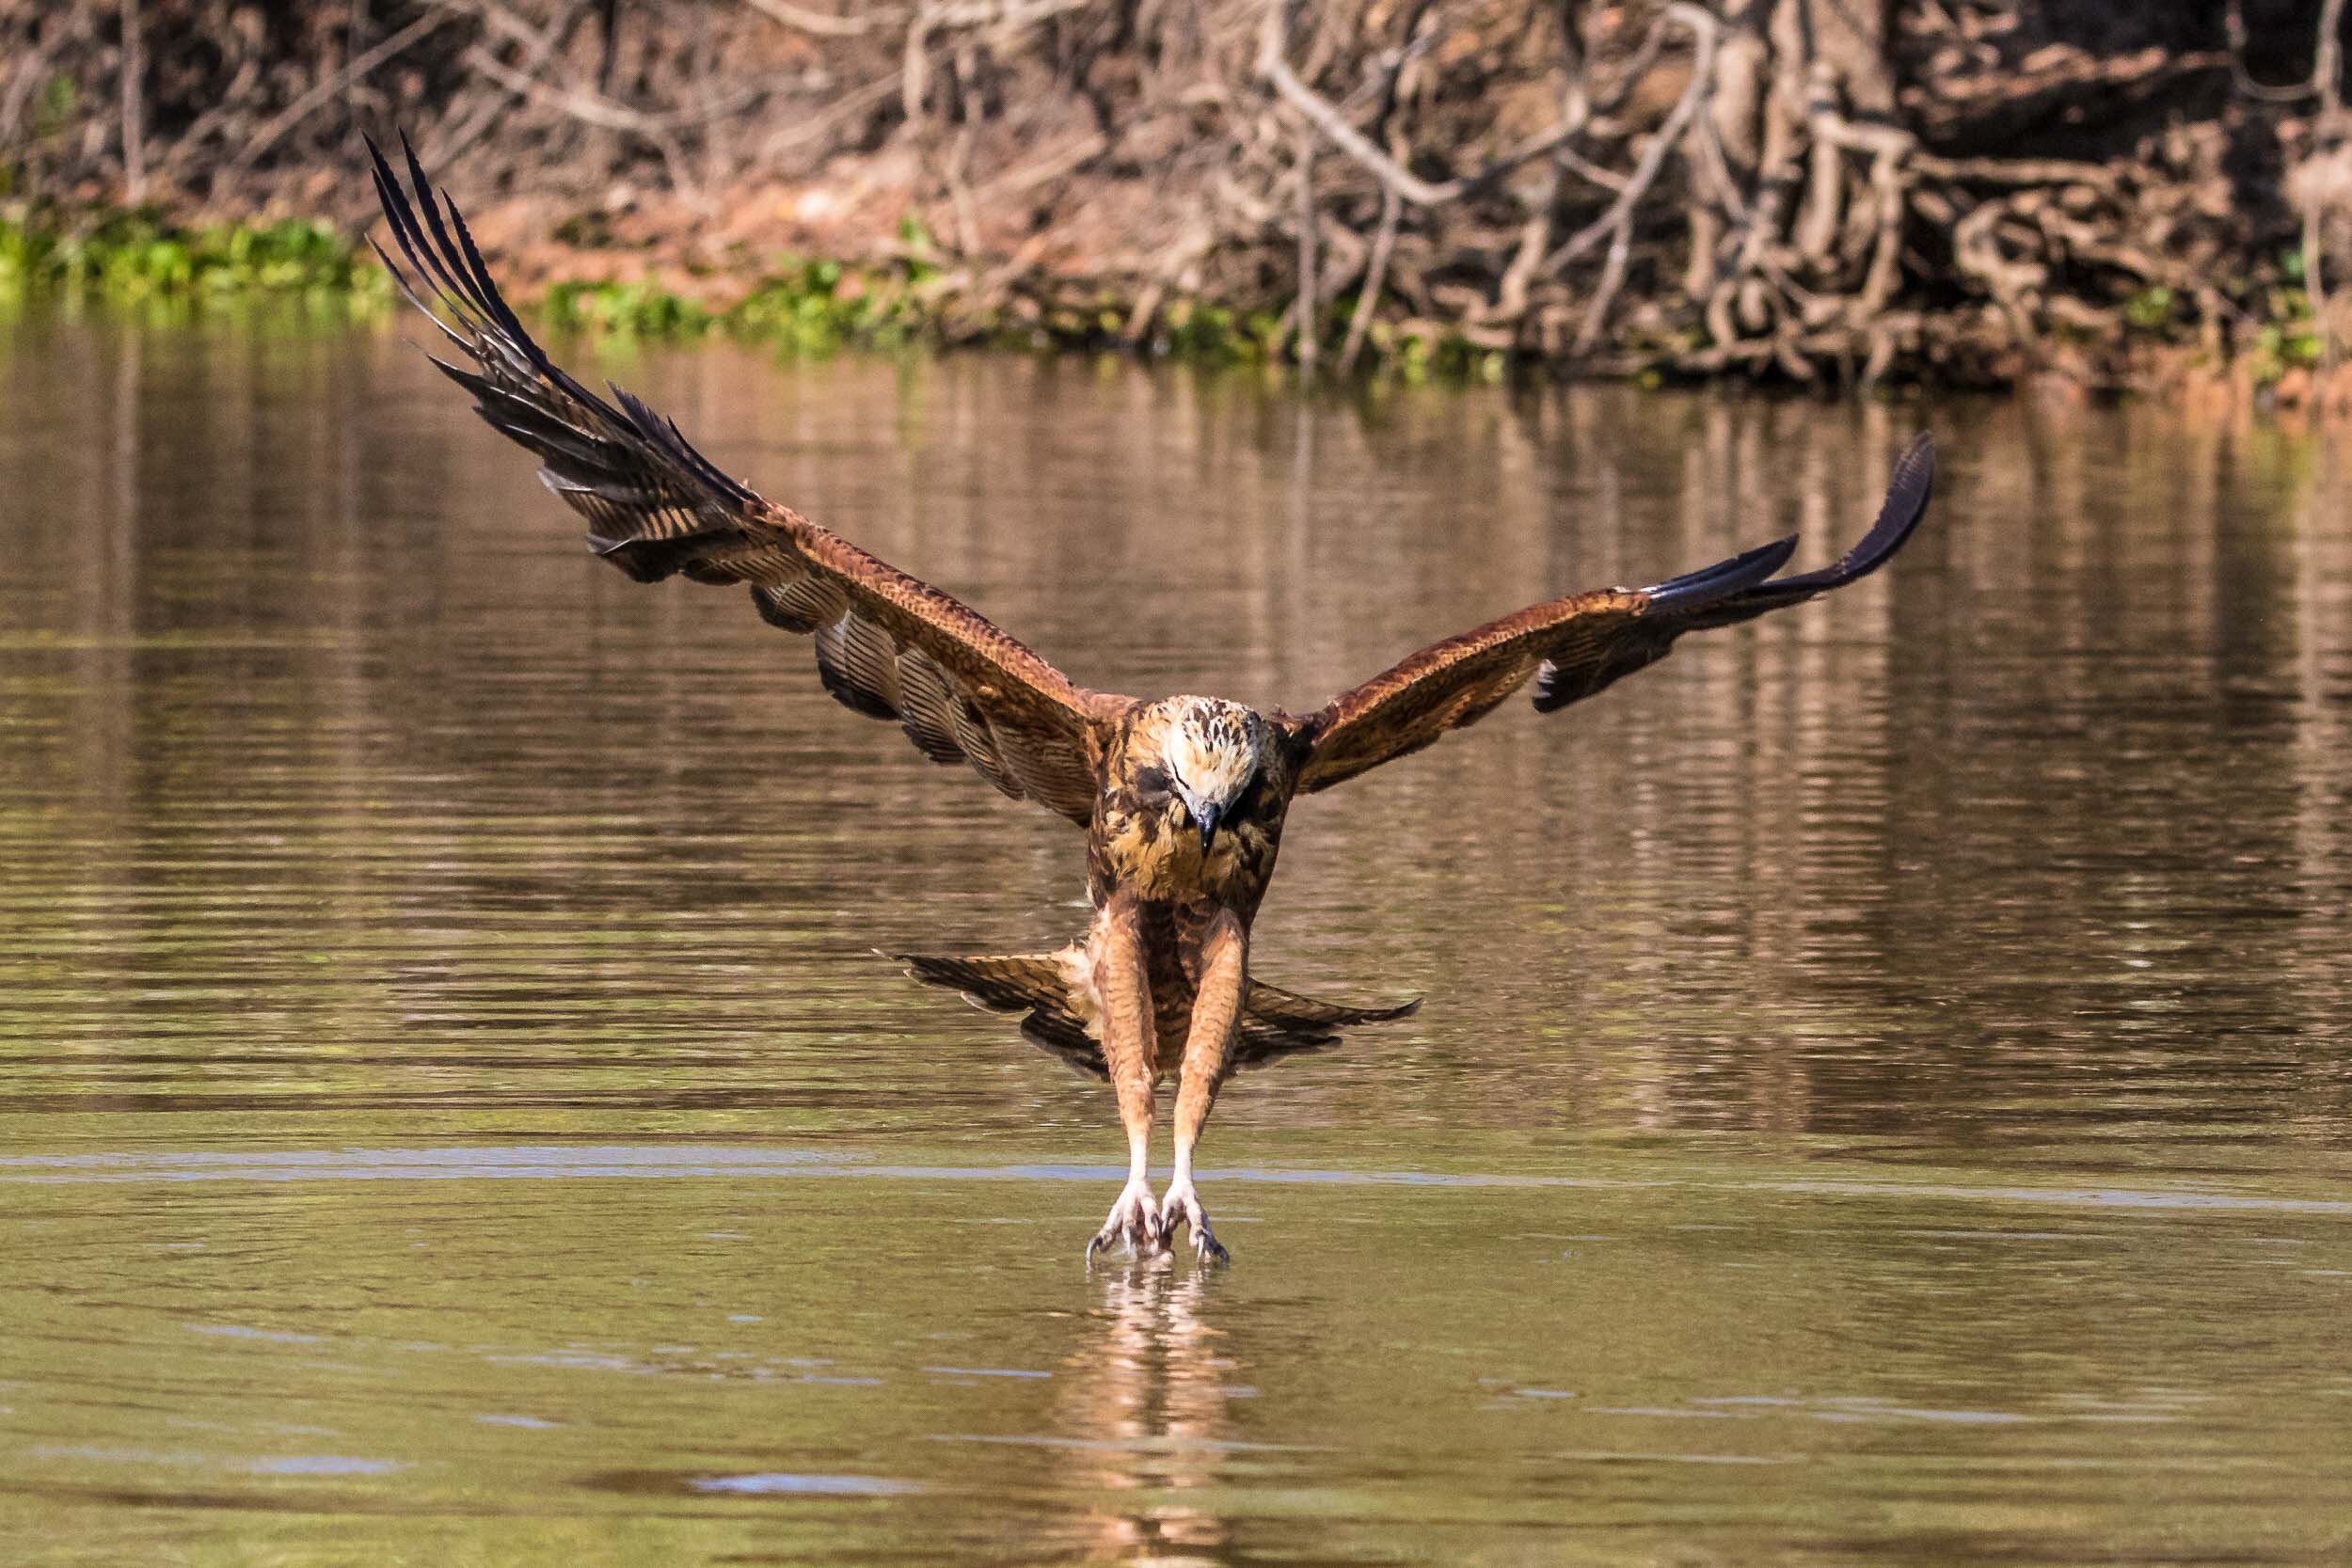 Black collared hawk catching a fish, SouthWild Pantanal Lodge, Brazil